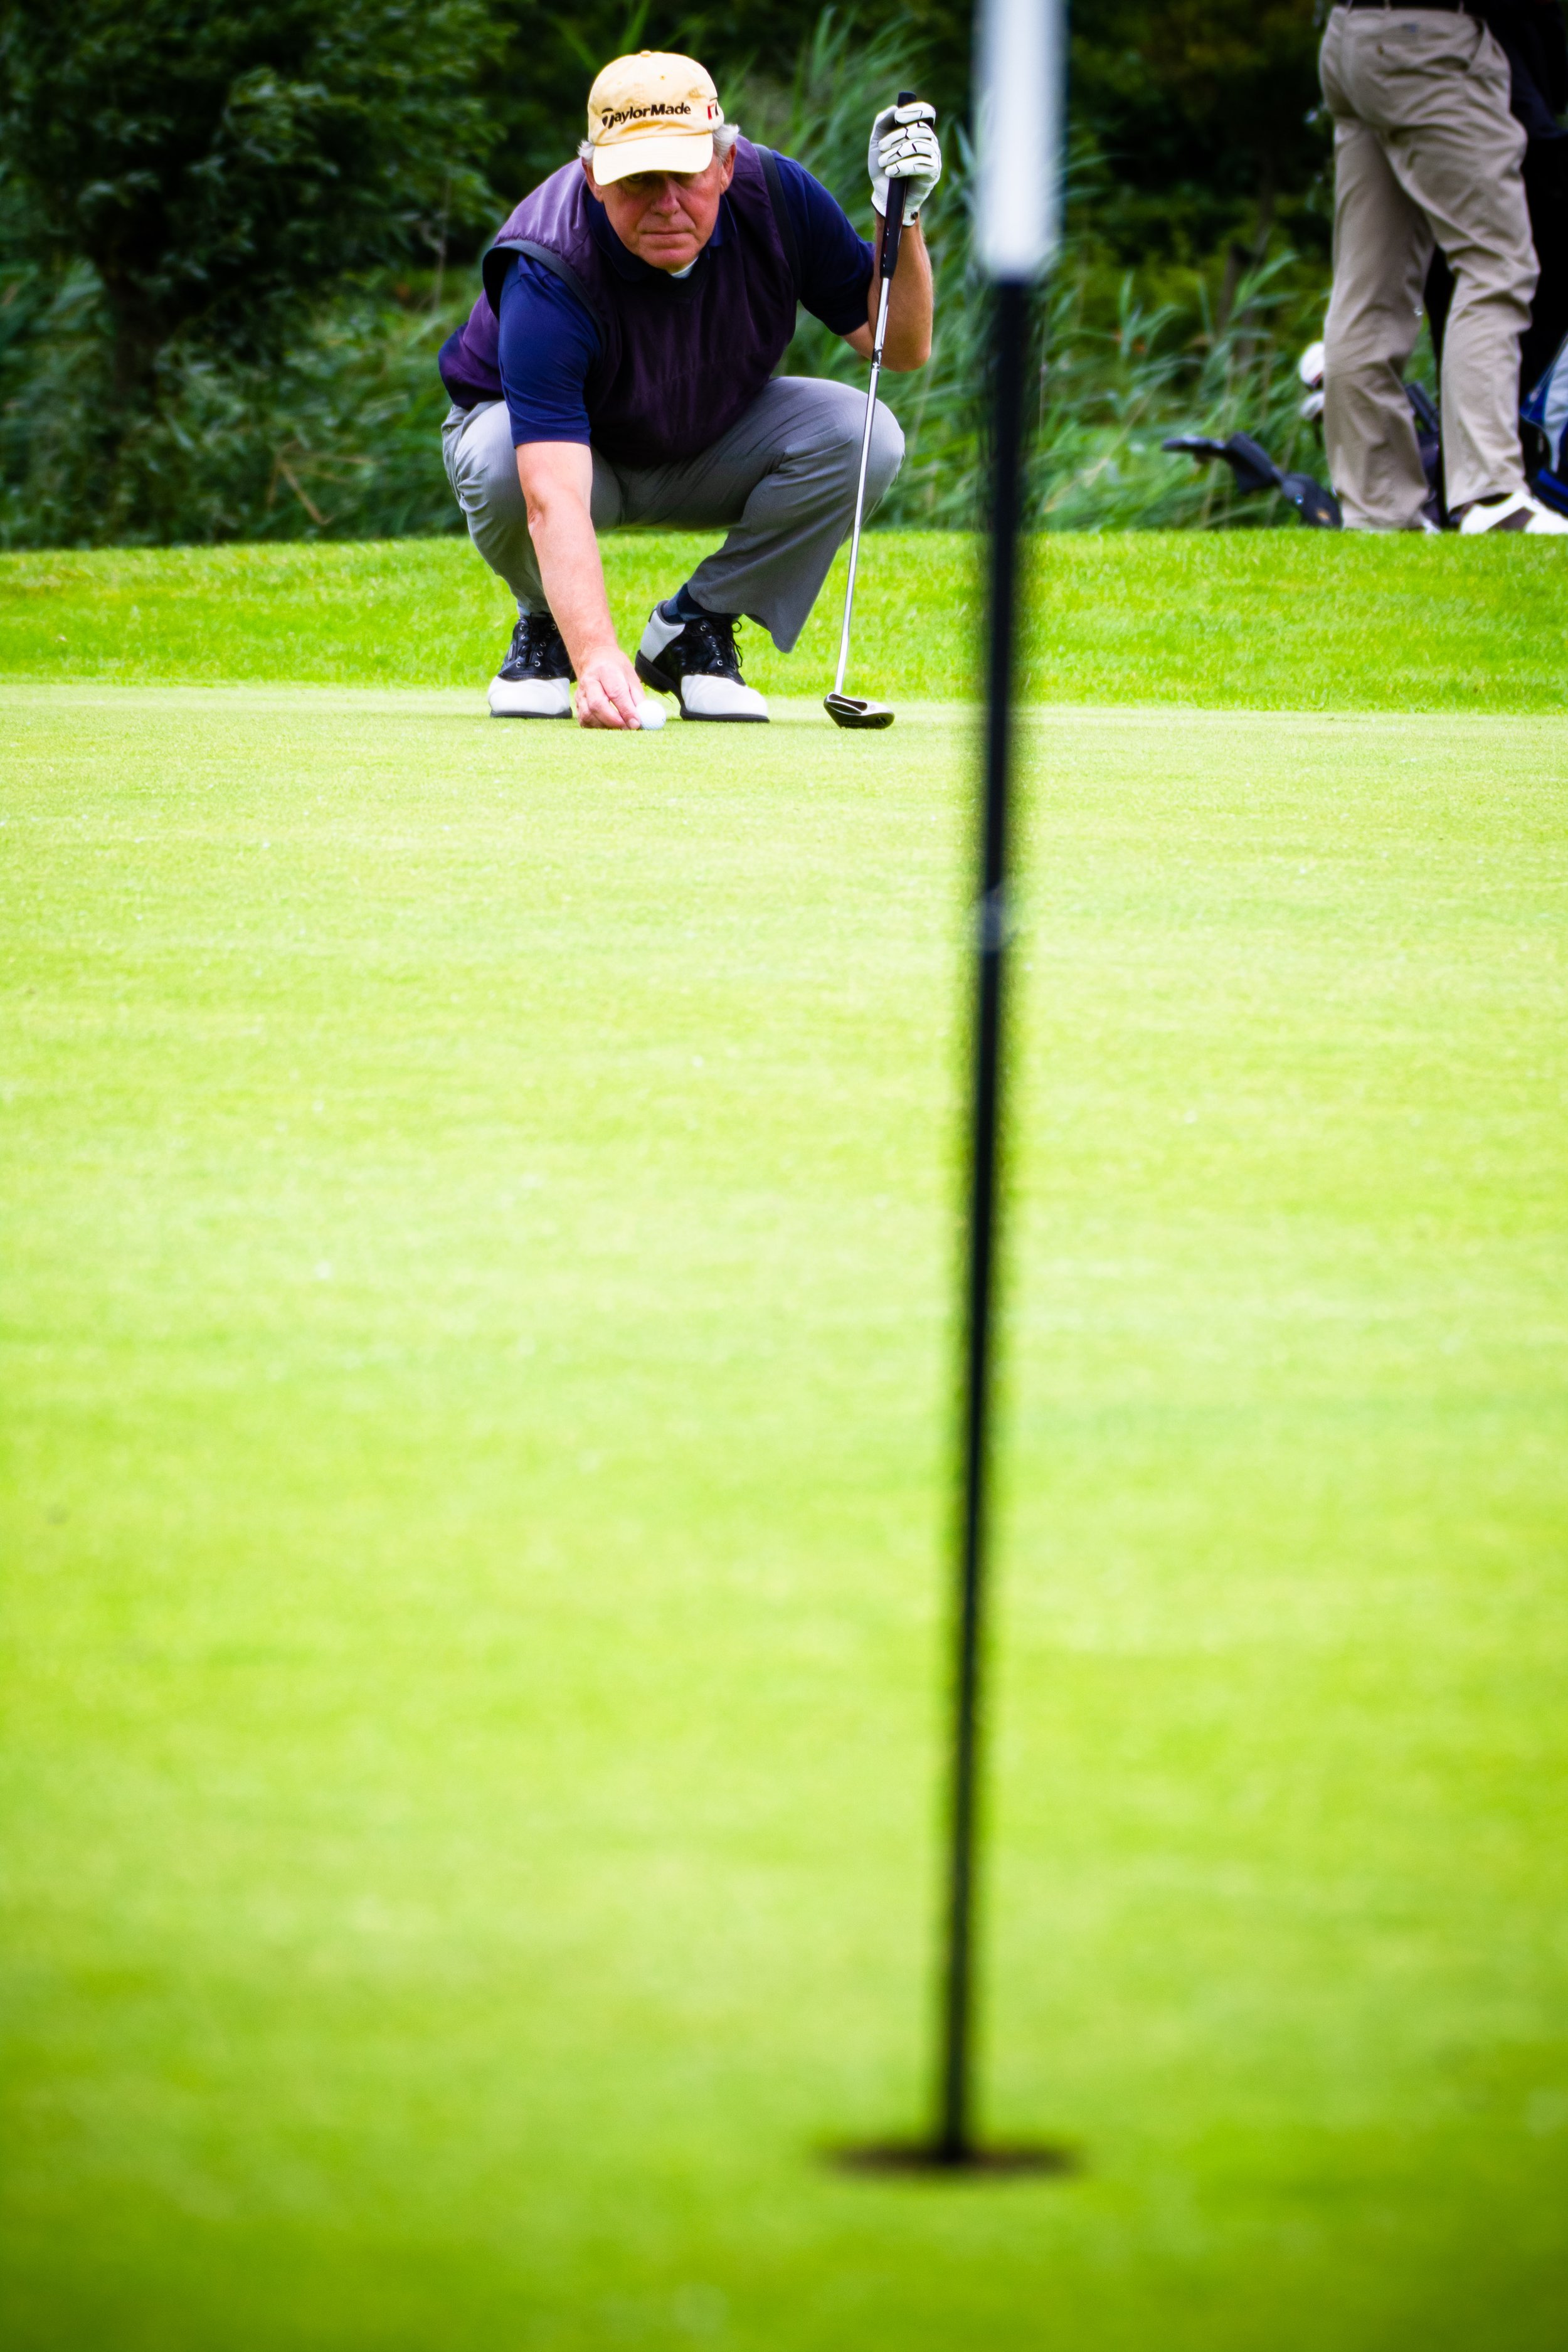 Stefan Segers eventfotografie IHC Merwede Golf toernooi-26.jpg